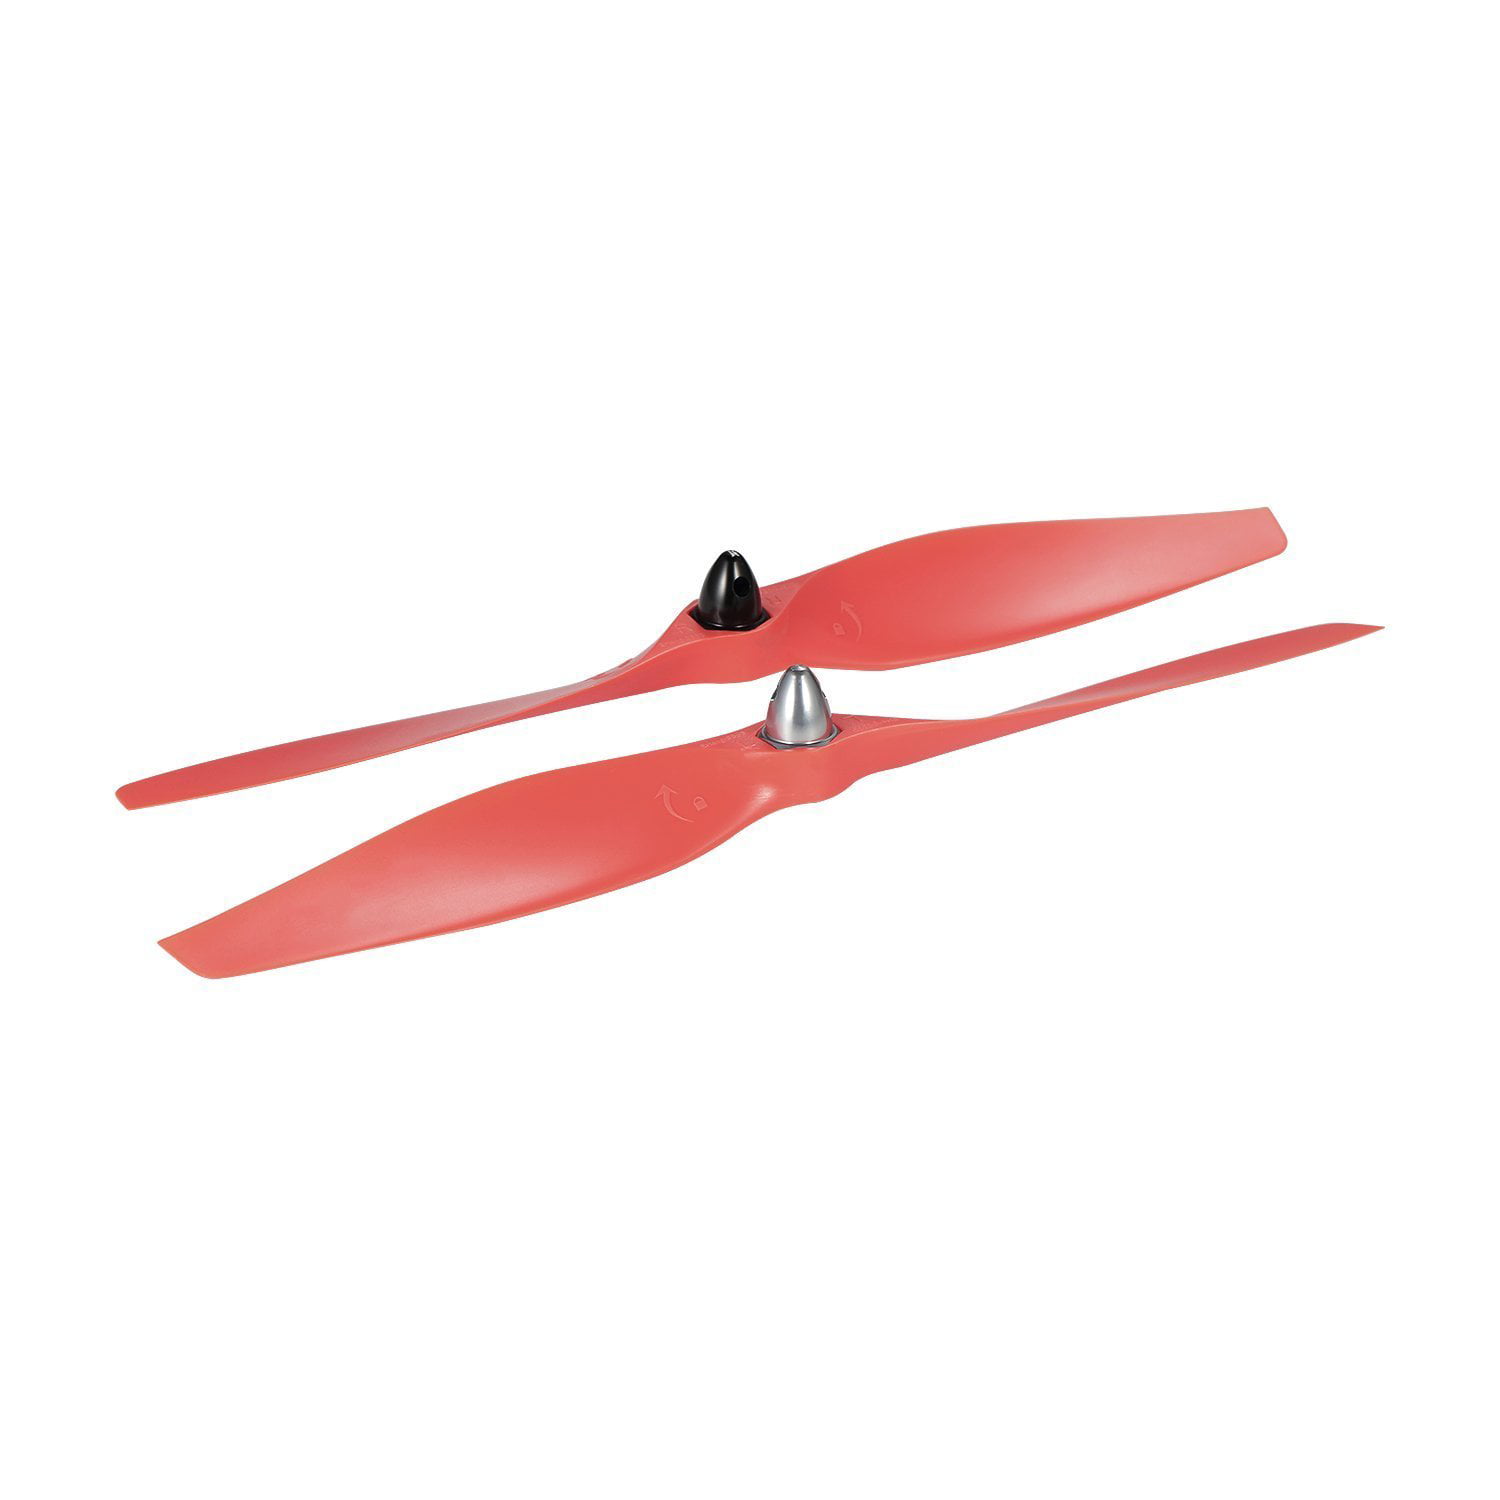 EHANG Propellers for Ehang Ghostdrone 2.0 Self Tightening Red NEW 4-pack 